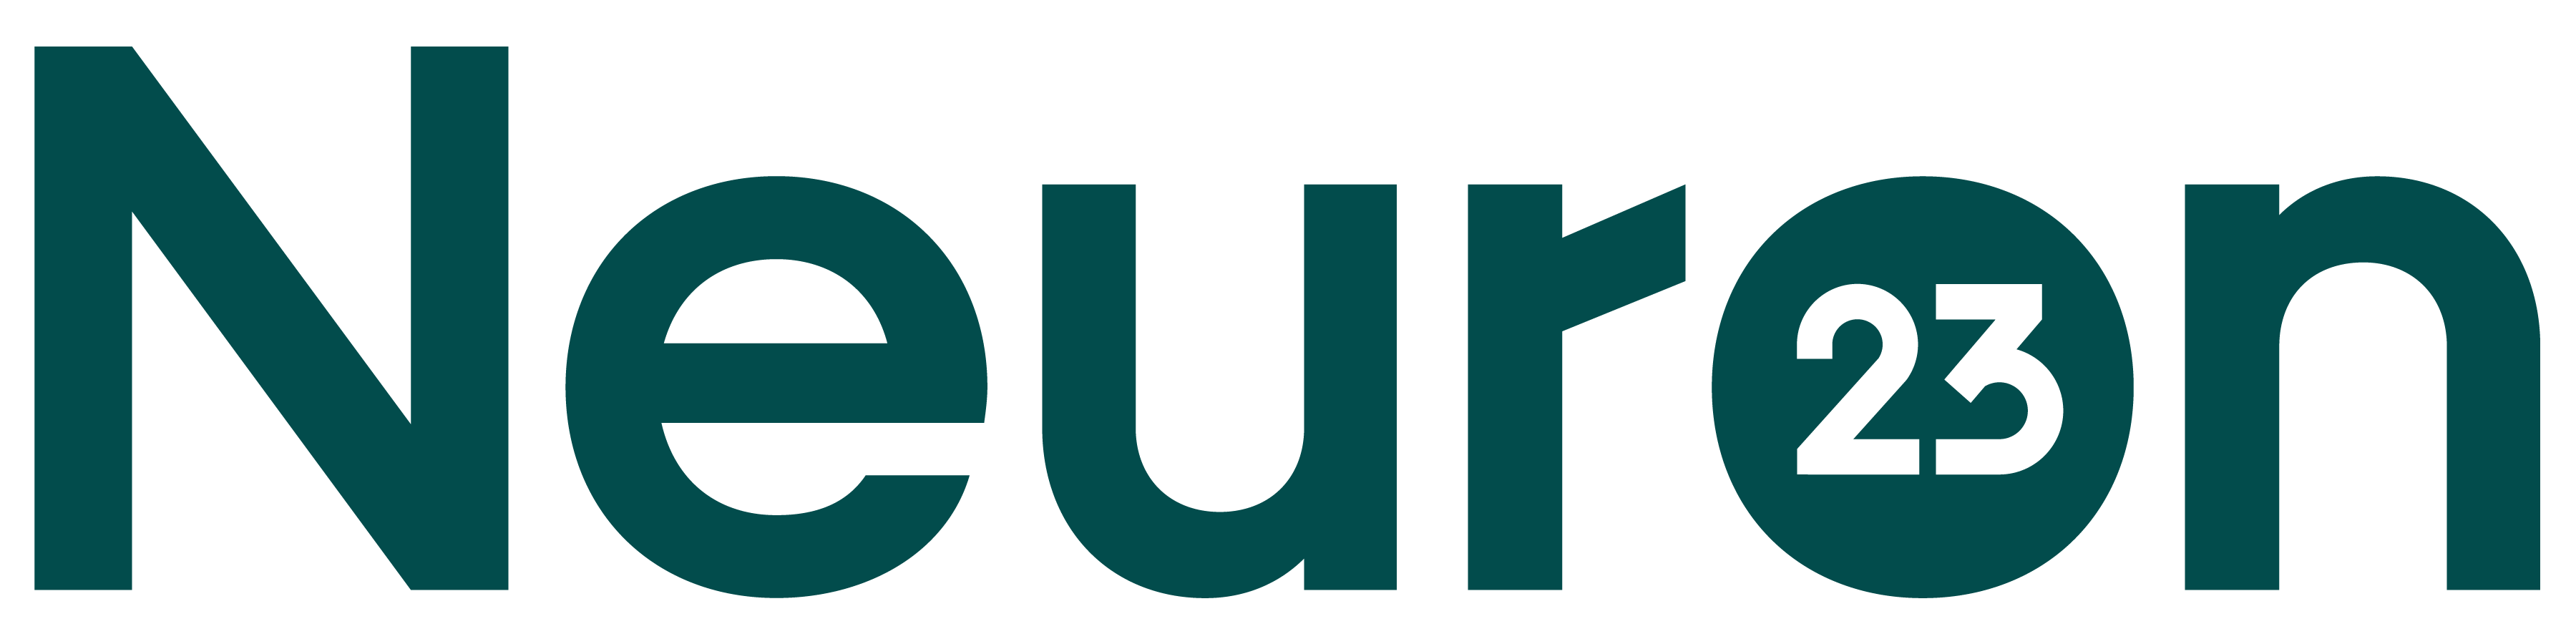 Vision Fund investment portfolio company Neuron23's logo